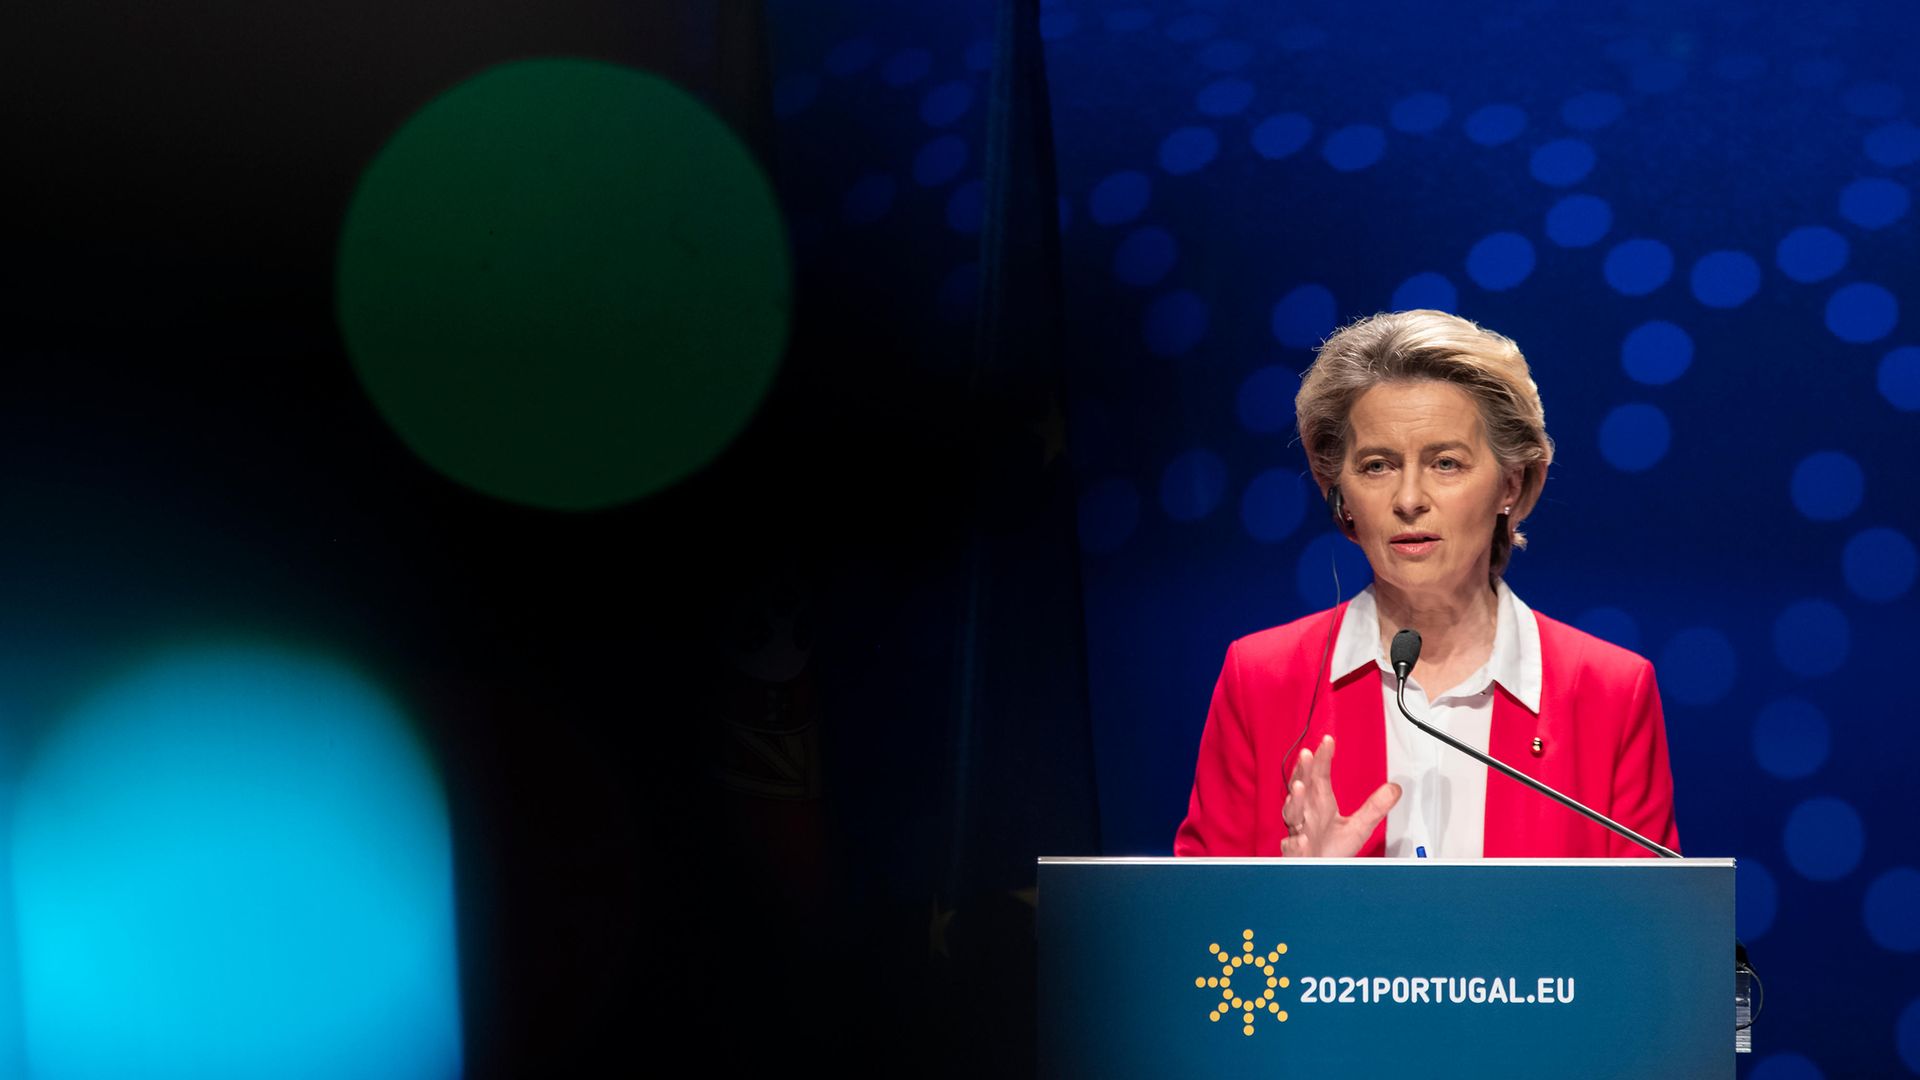 President of the European Commission, Ursula von der Leyen - Credit: SOPA Images/LightRocket via Gett